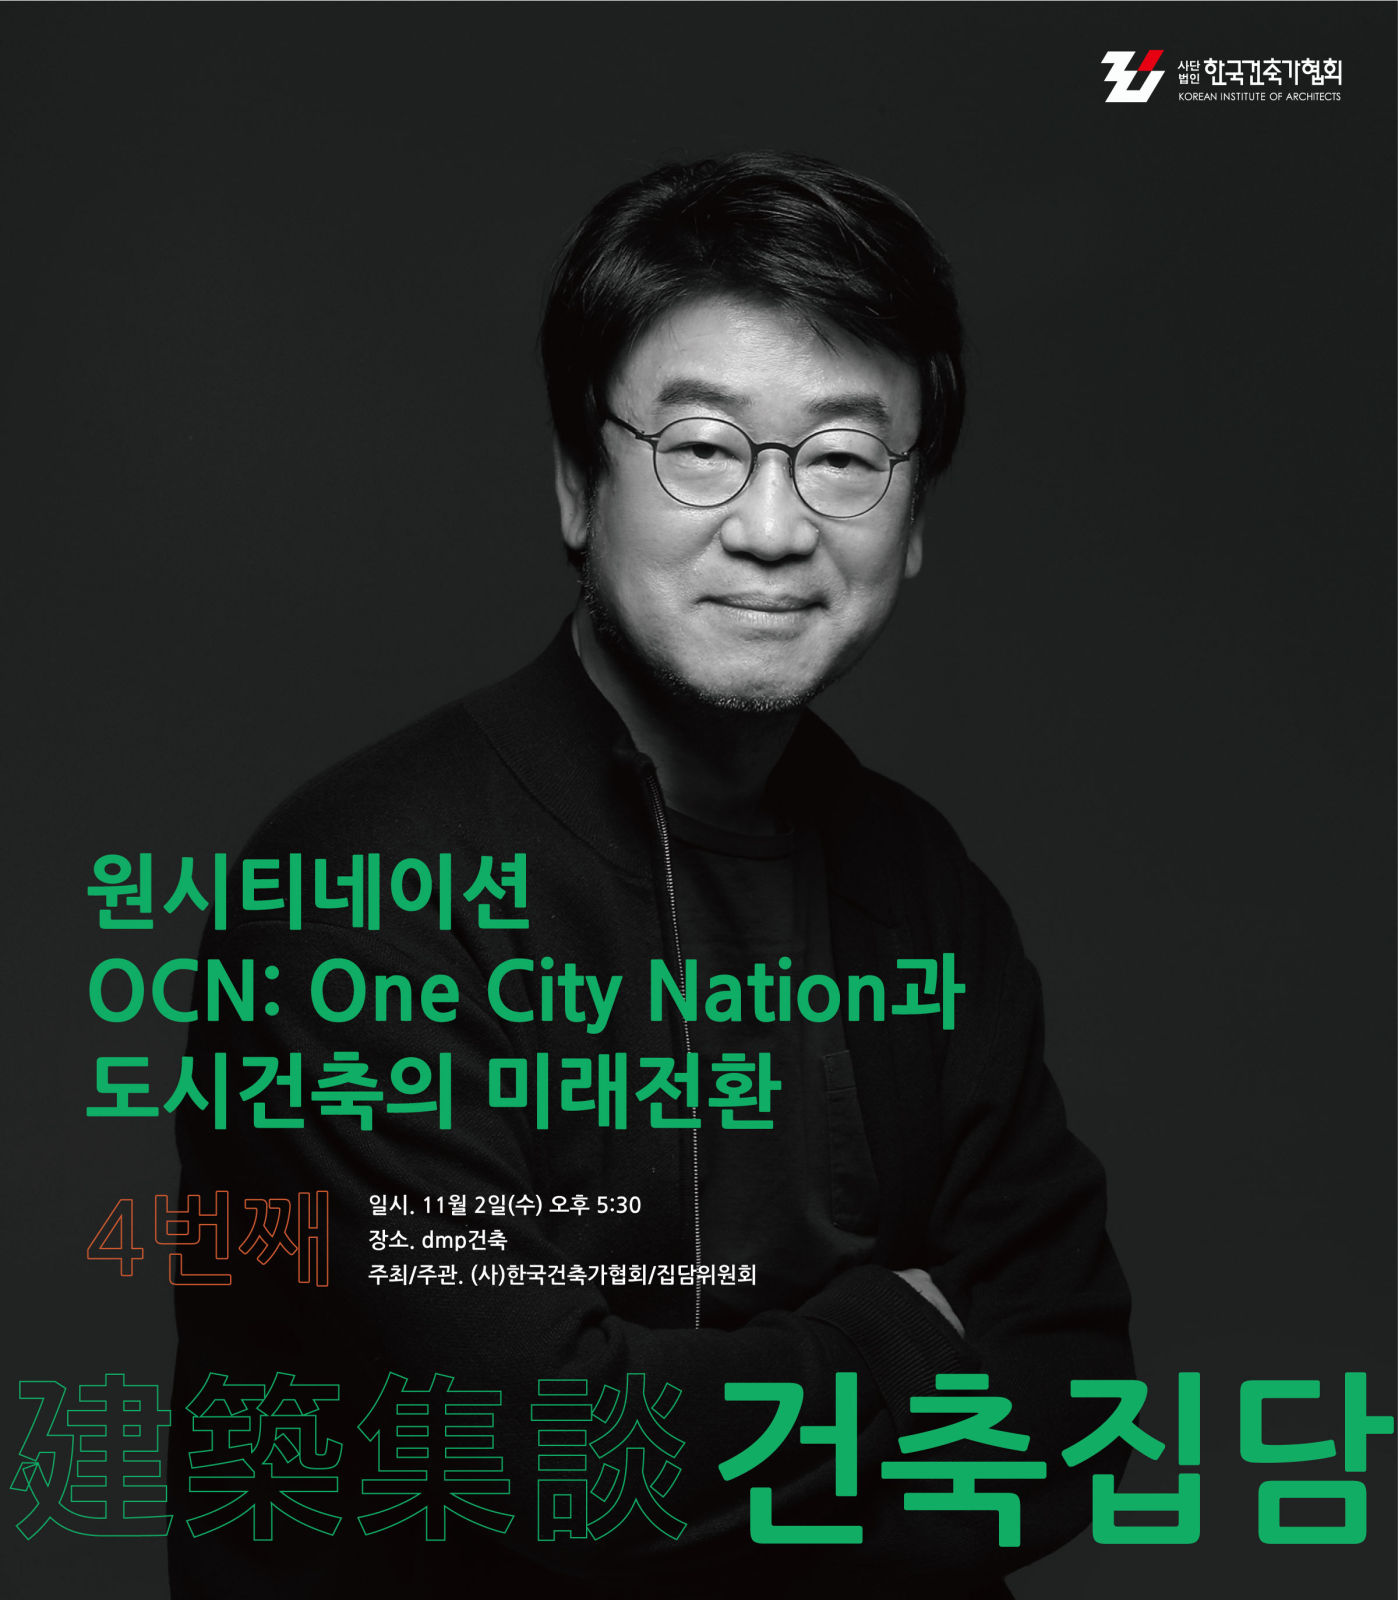 You are currently viewing 제4회 집담회 <원시티네이션 OCN: One City Nation과 도시건축의 미래전환>